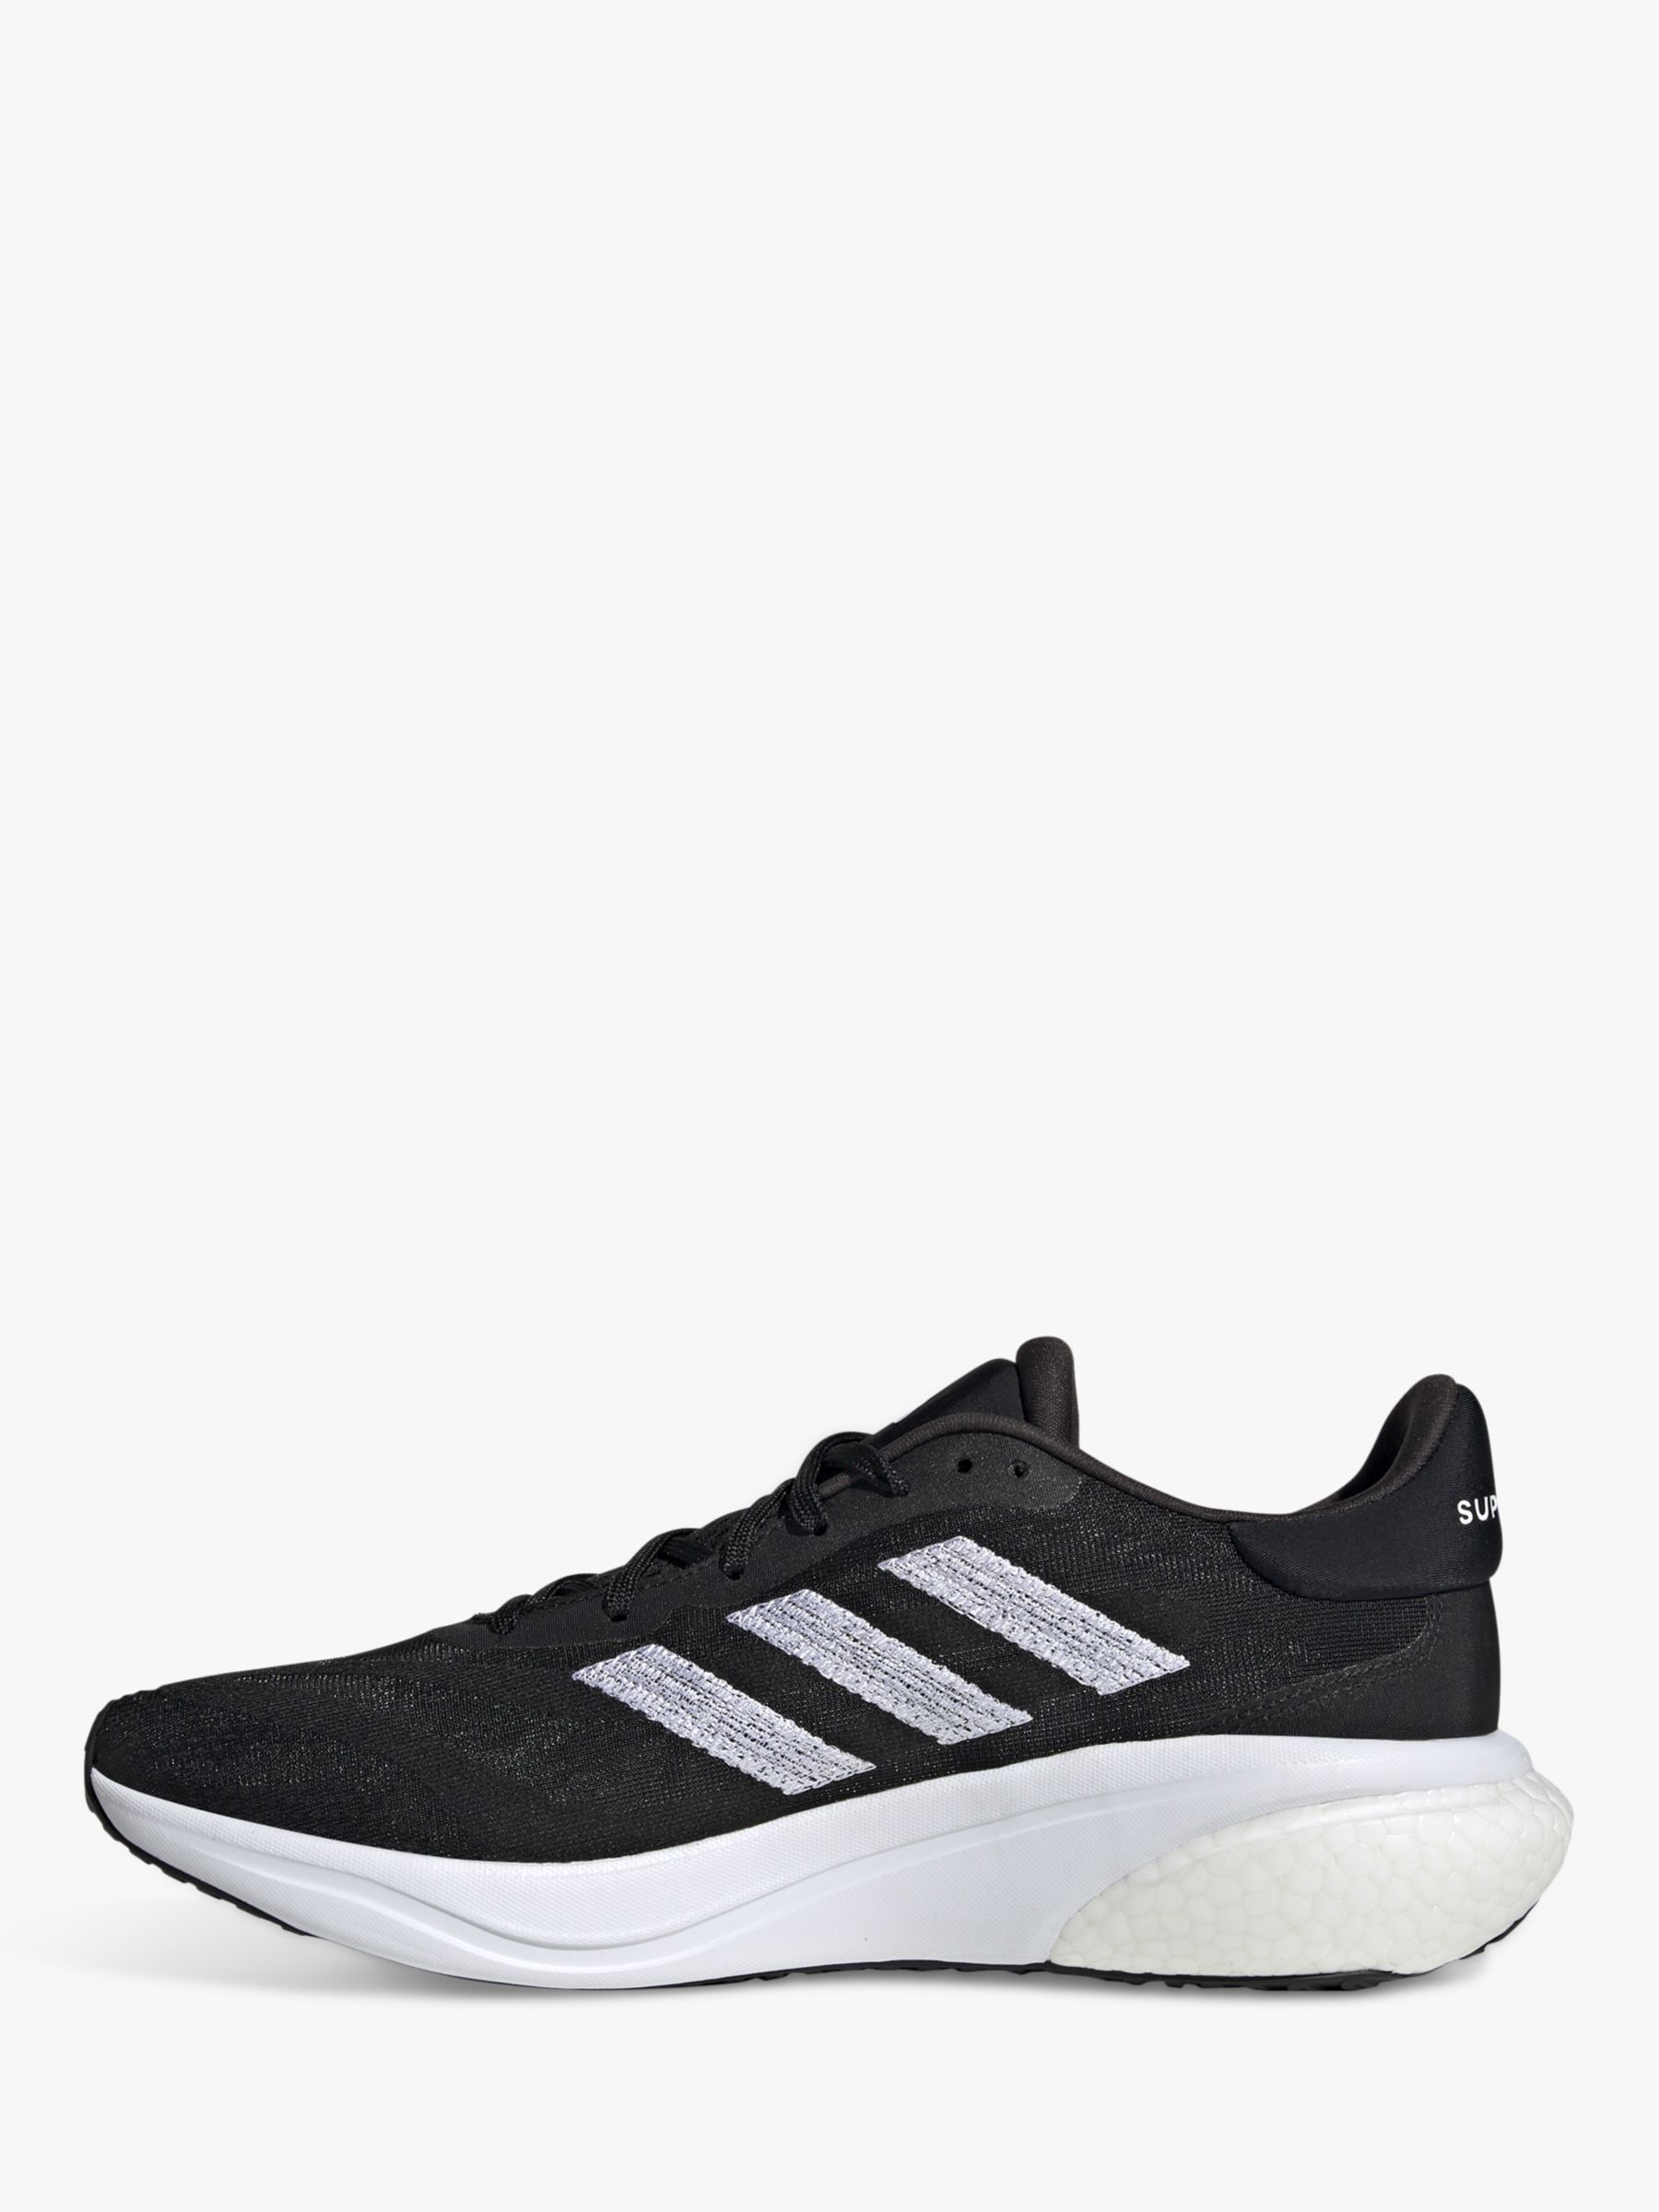 adidas Supernova 3 Men's Running Shoes, White/Core Black